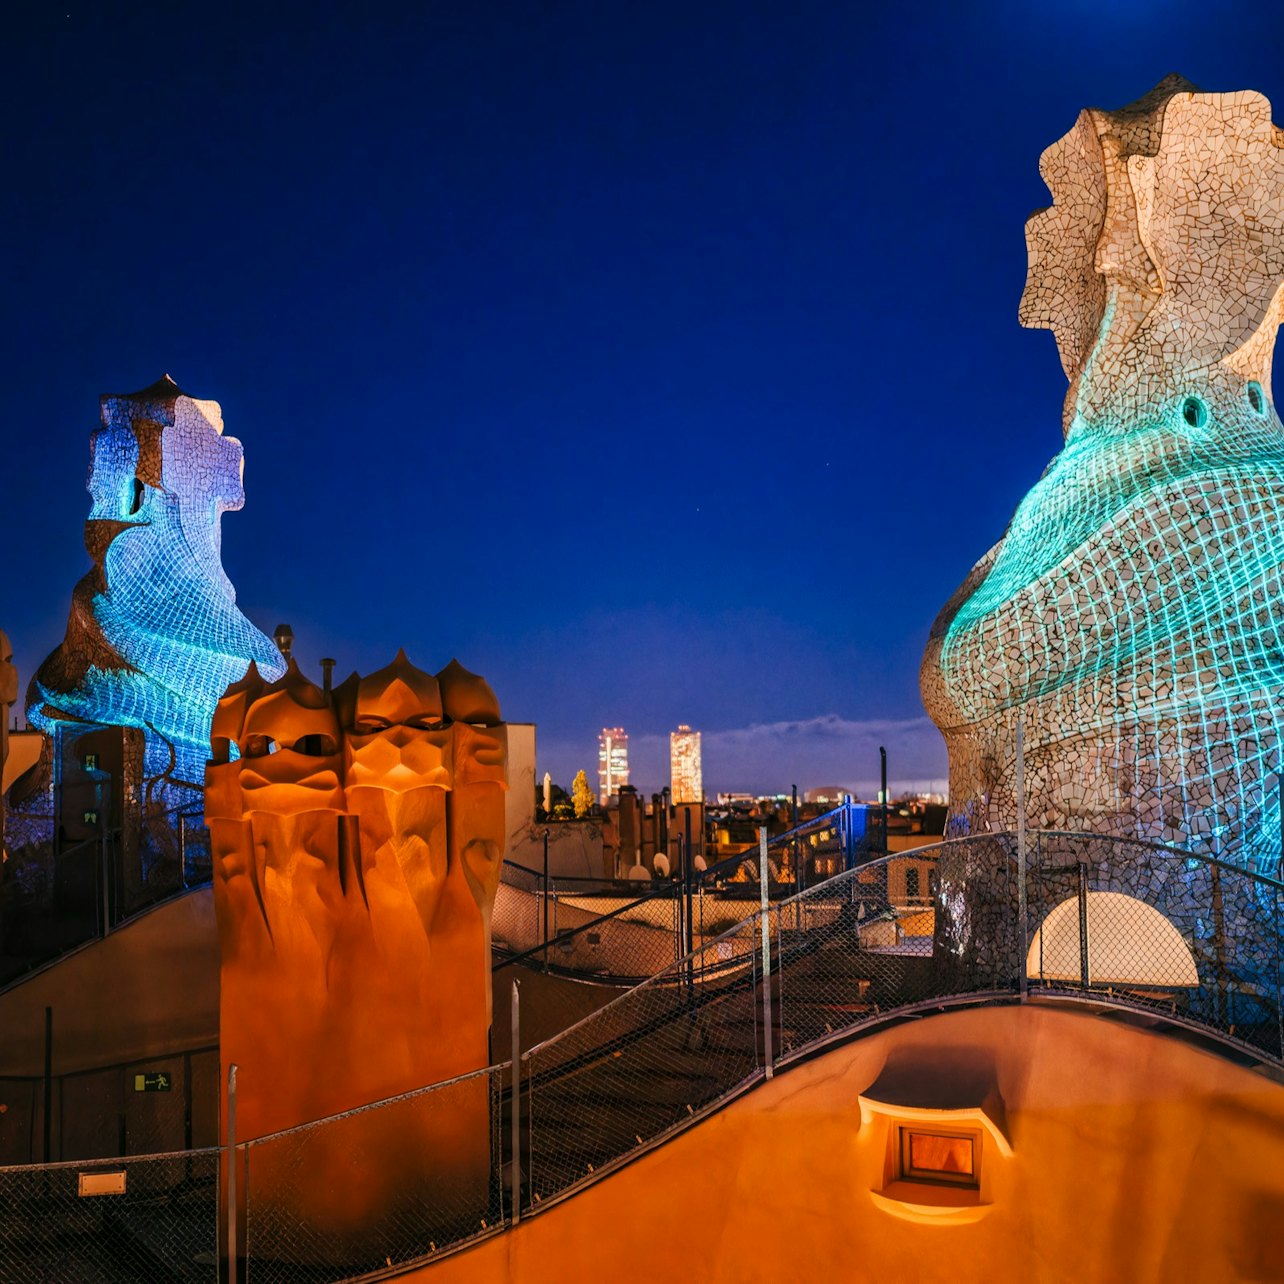 La Pedrera: Night Experience - Accommodations in Barcelona